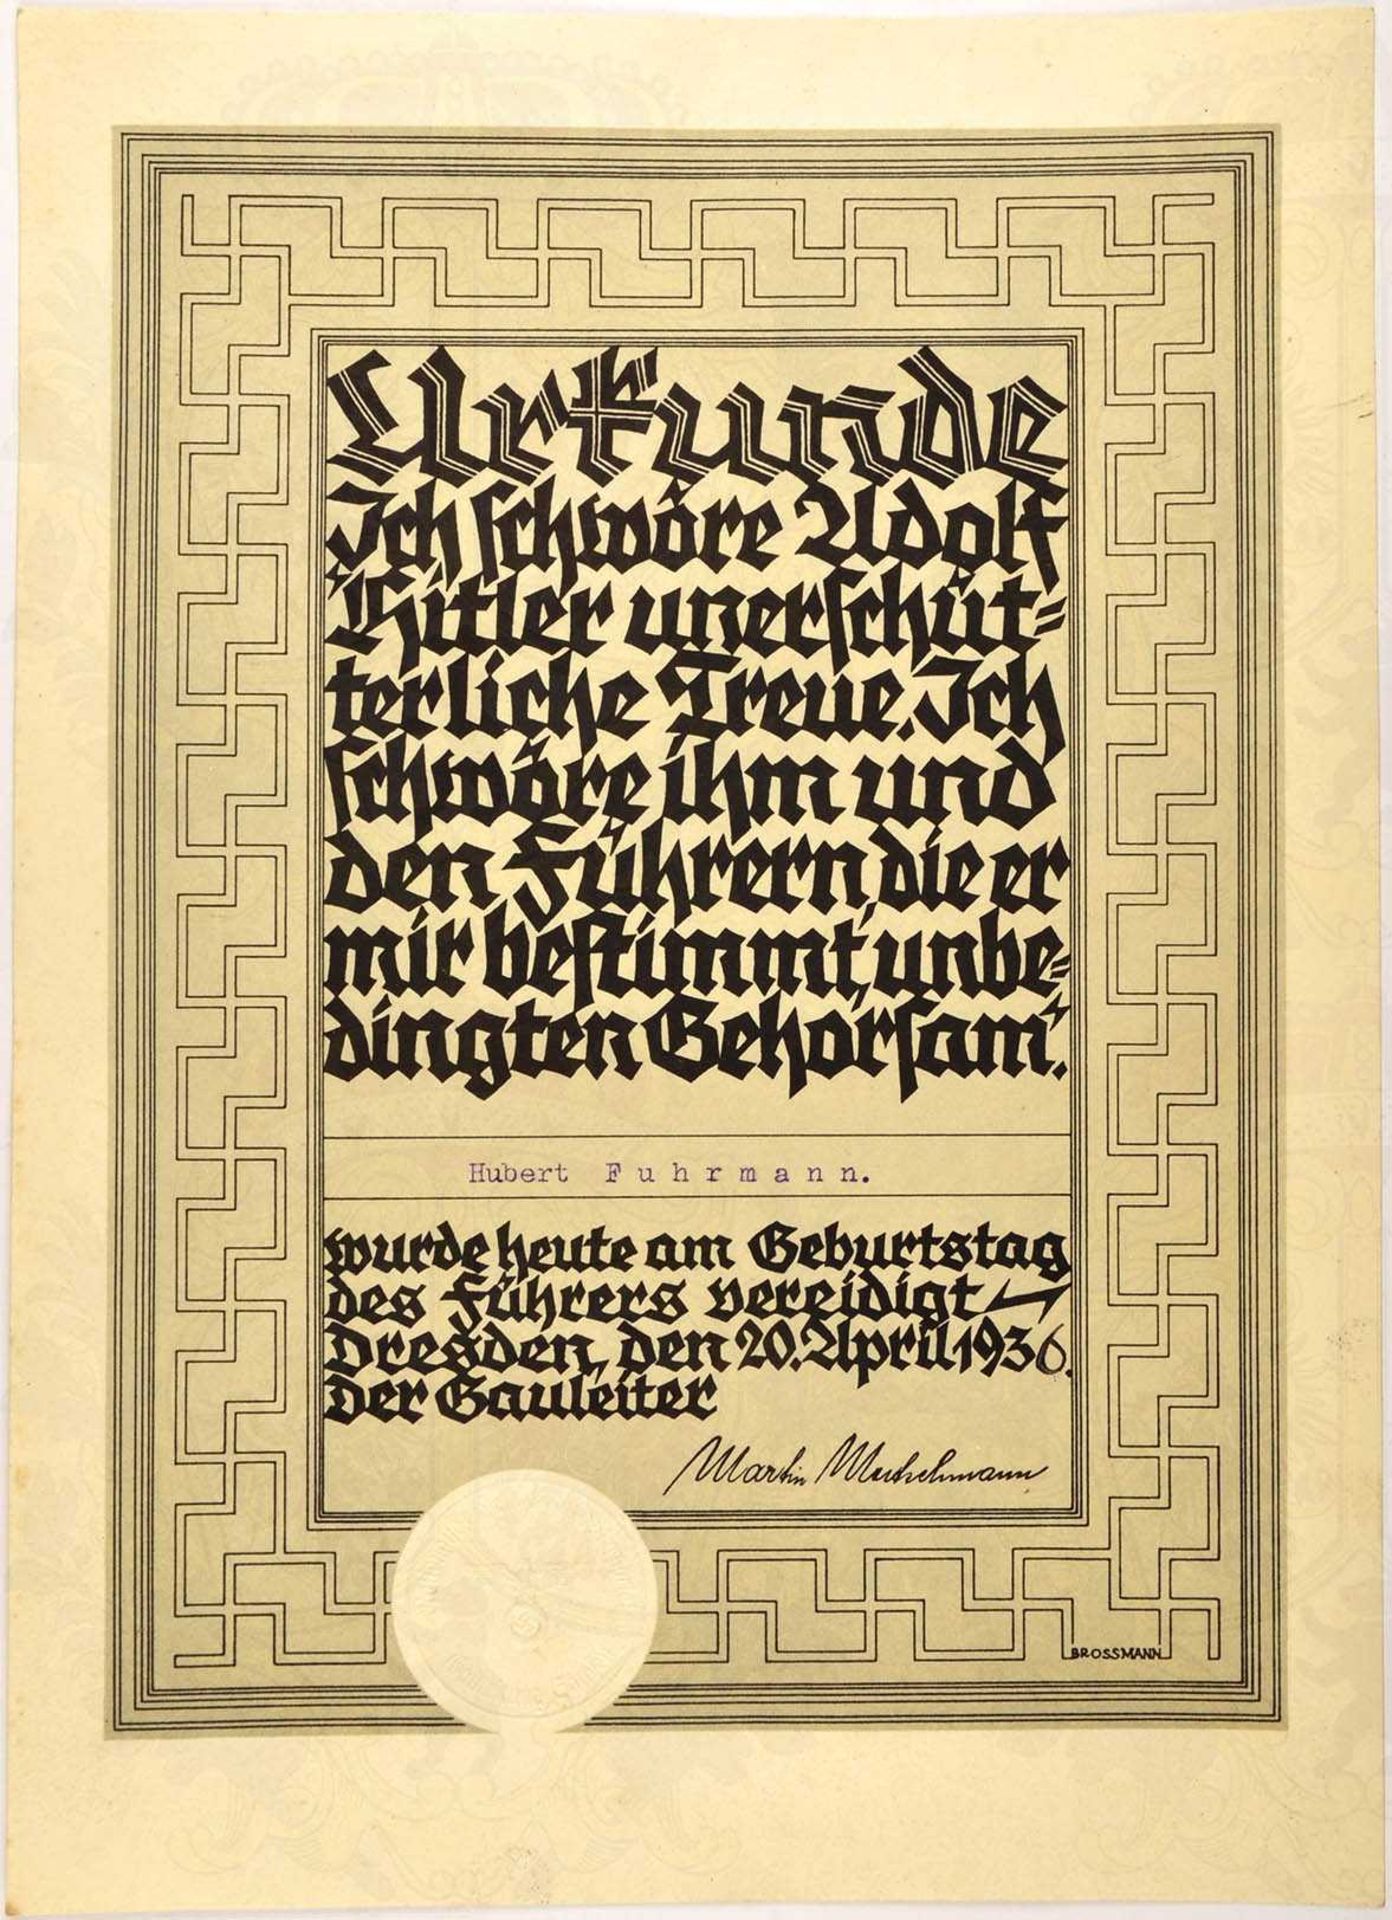 EIDESURKUNDE, d. Gauleitung Sachsen, Treueschwur auf Adolf Hitler, f. e. PG, 20. April 1936, faks. U